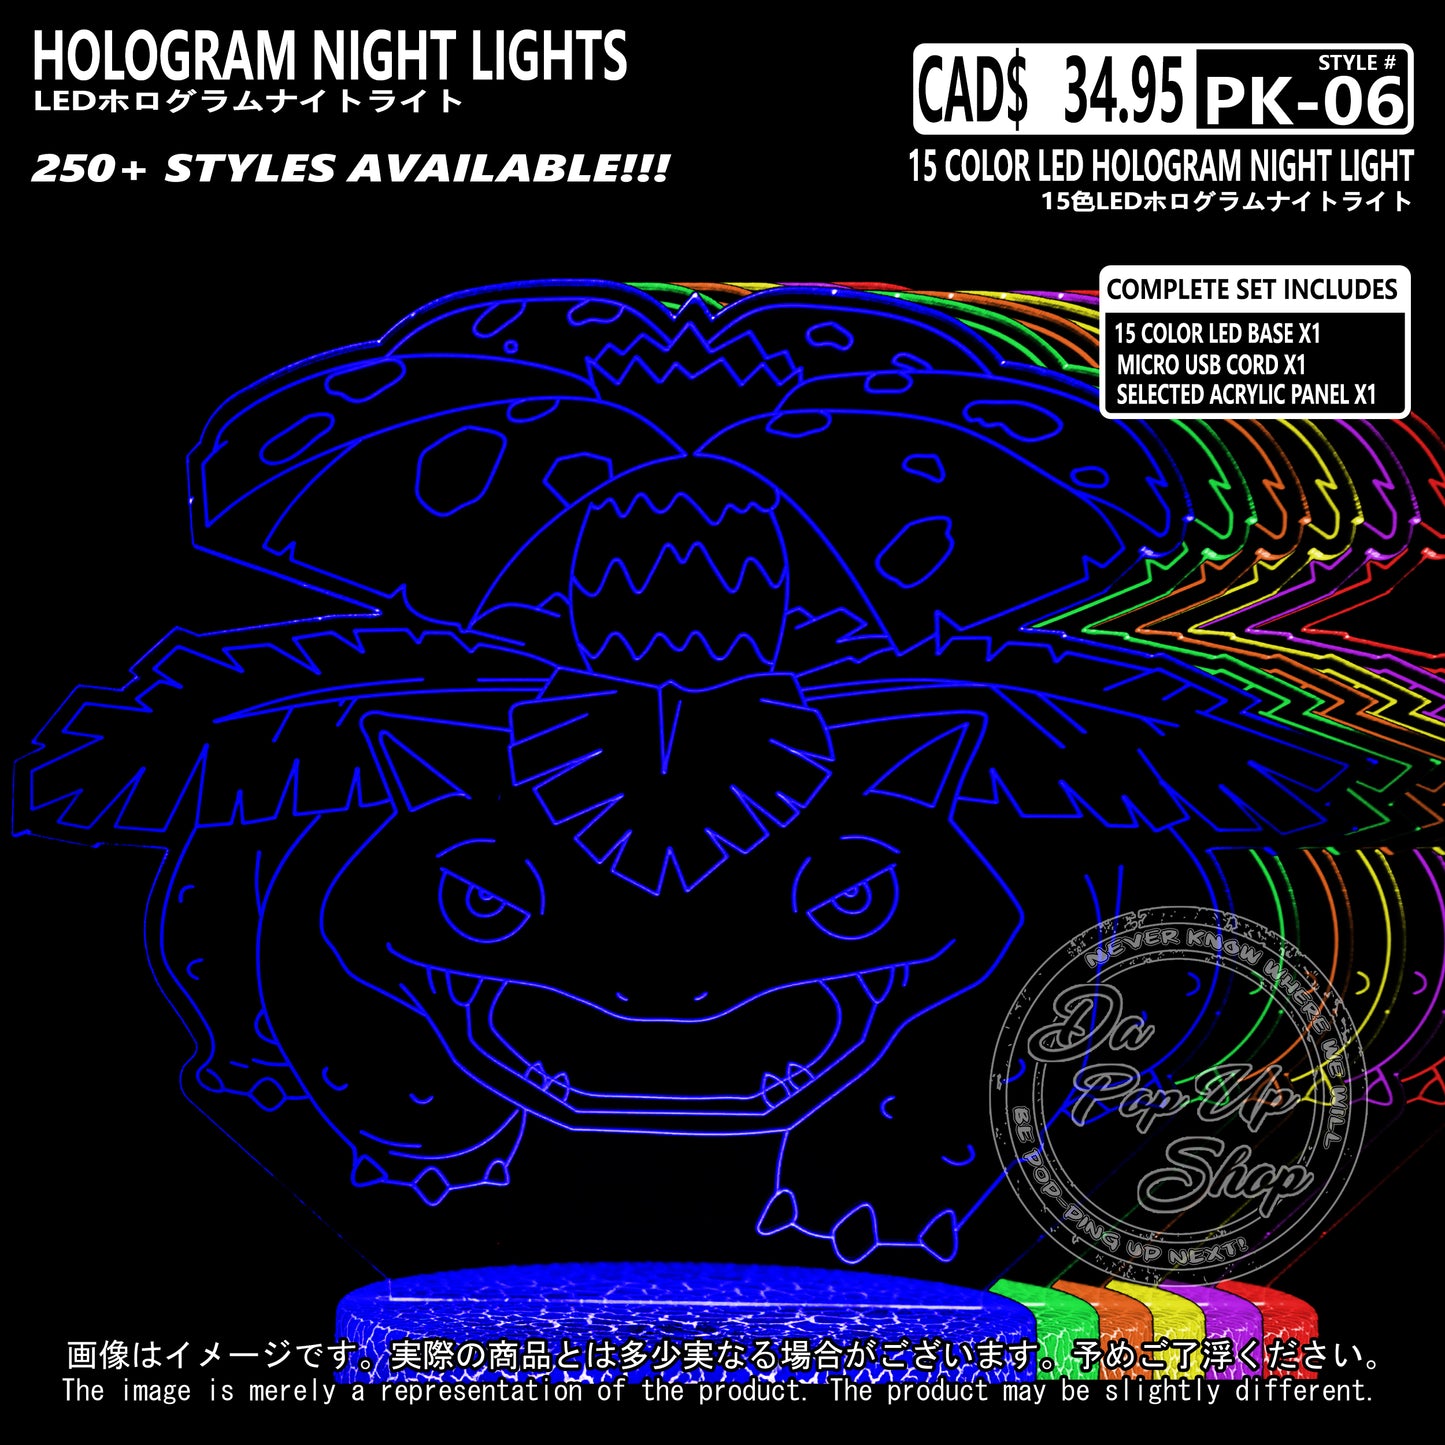 (PKM-06) VENUSAUR Pokemon Hologram LED Night Light